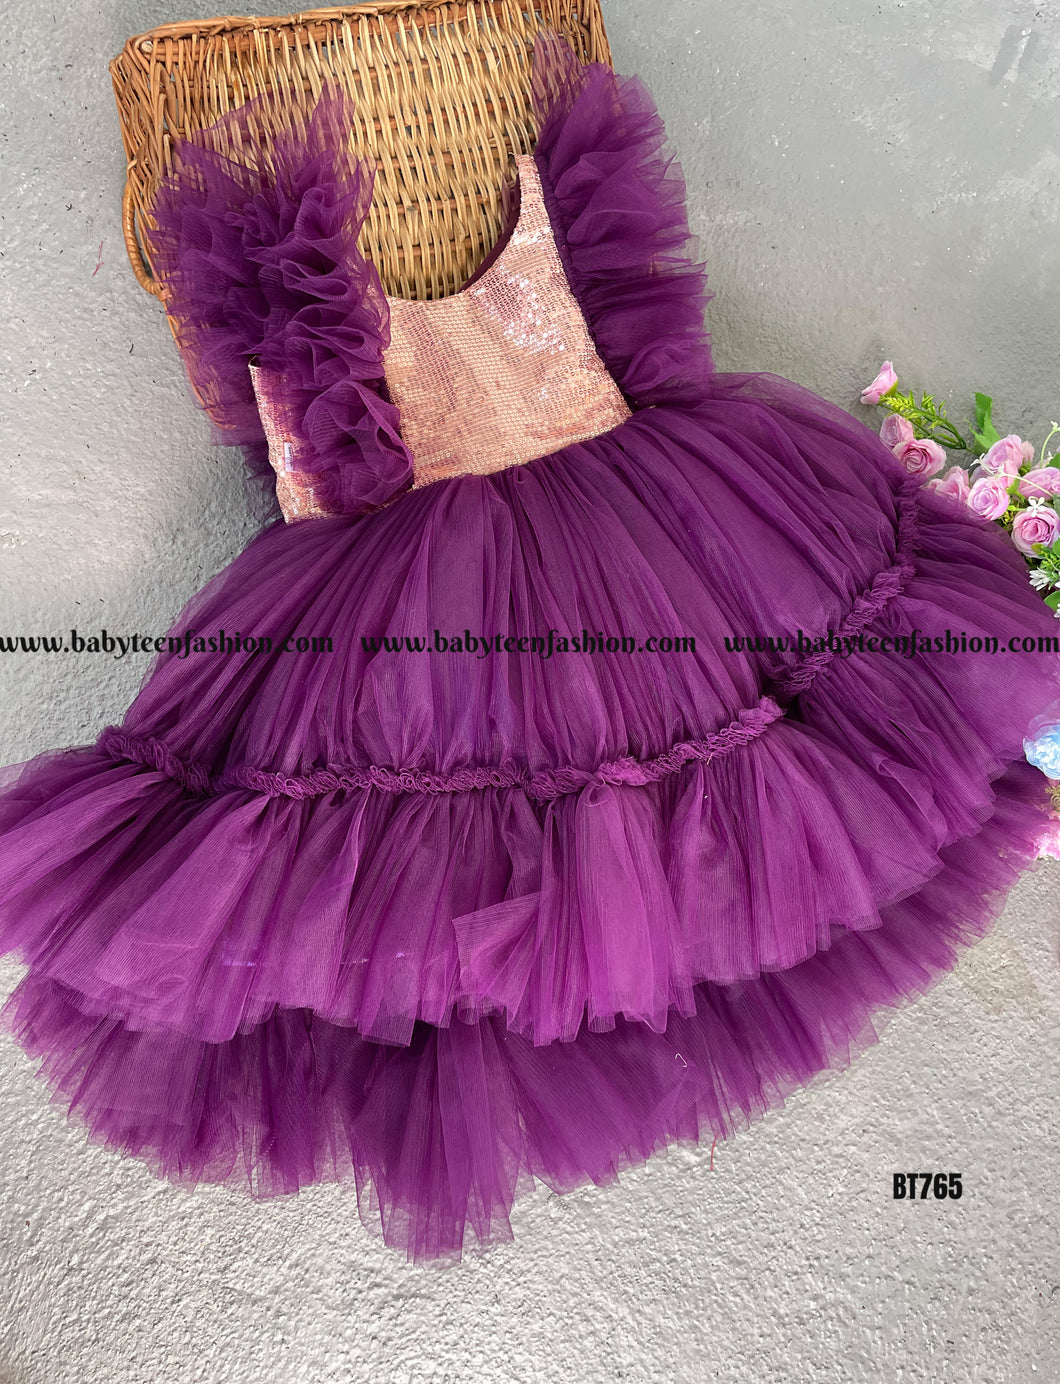 BT765 Princess Purple Delight - Celebrate in Style